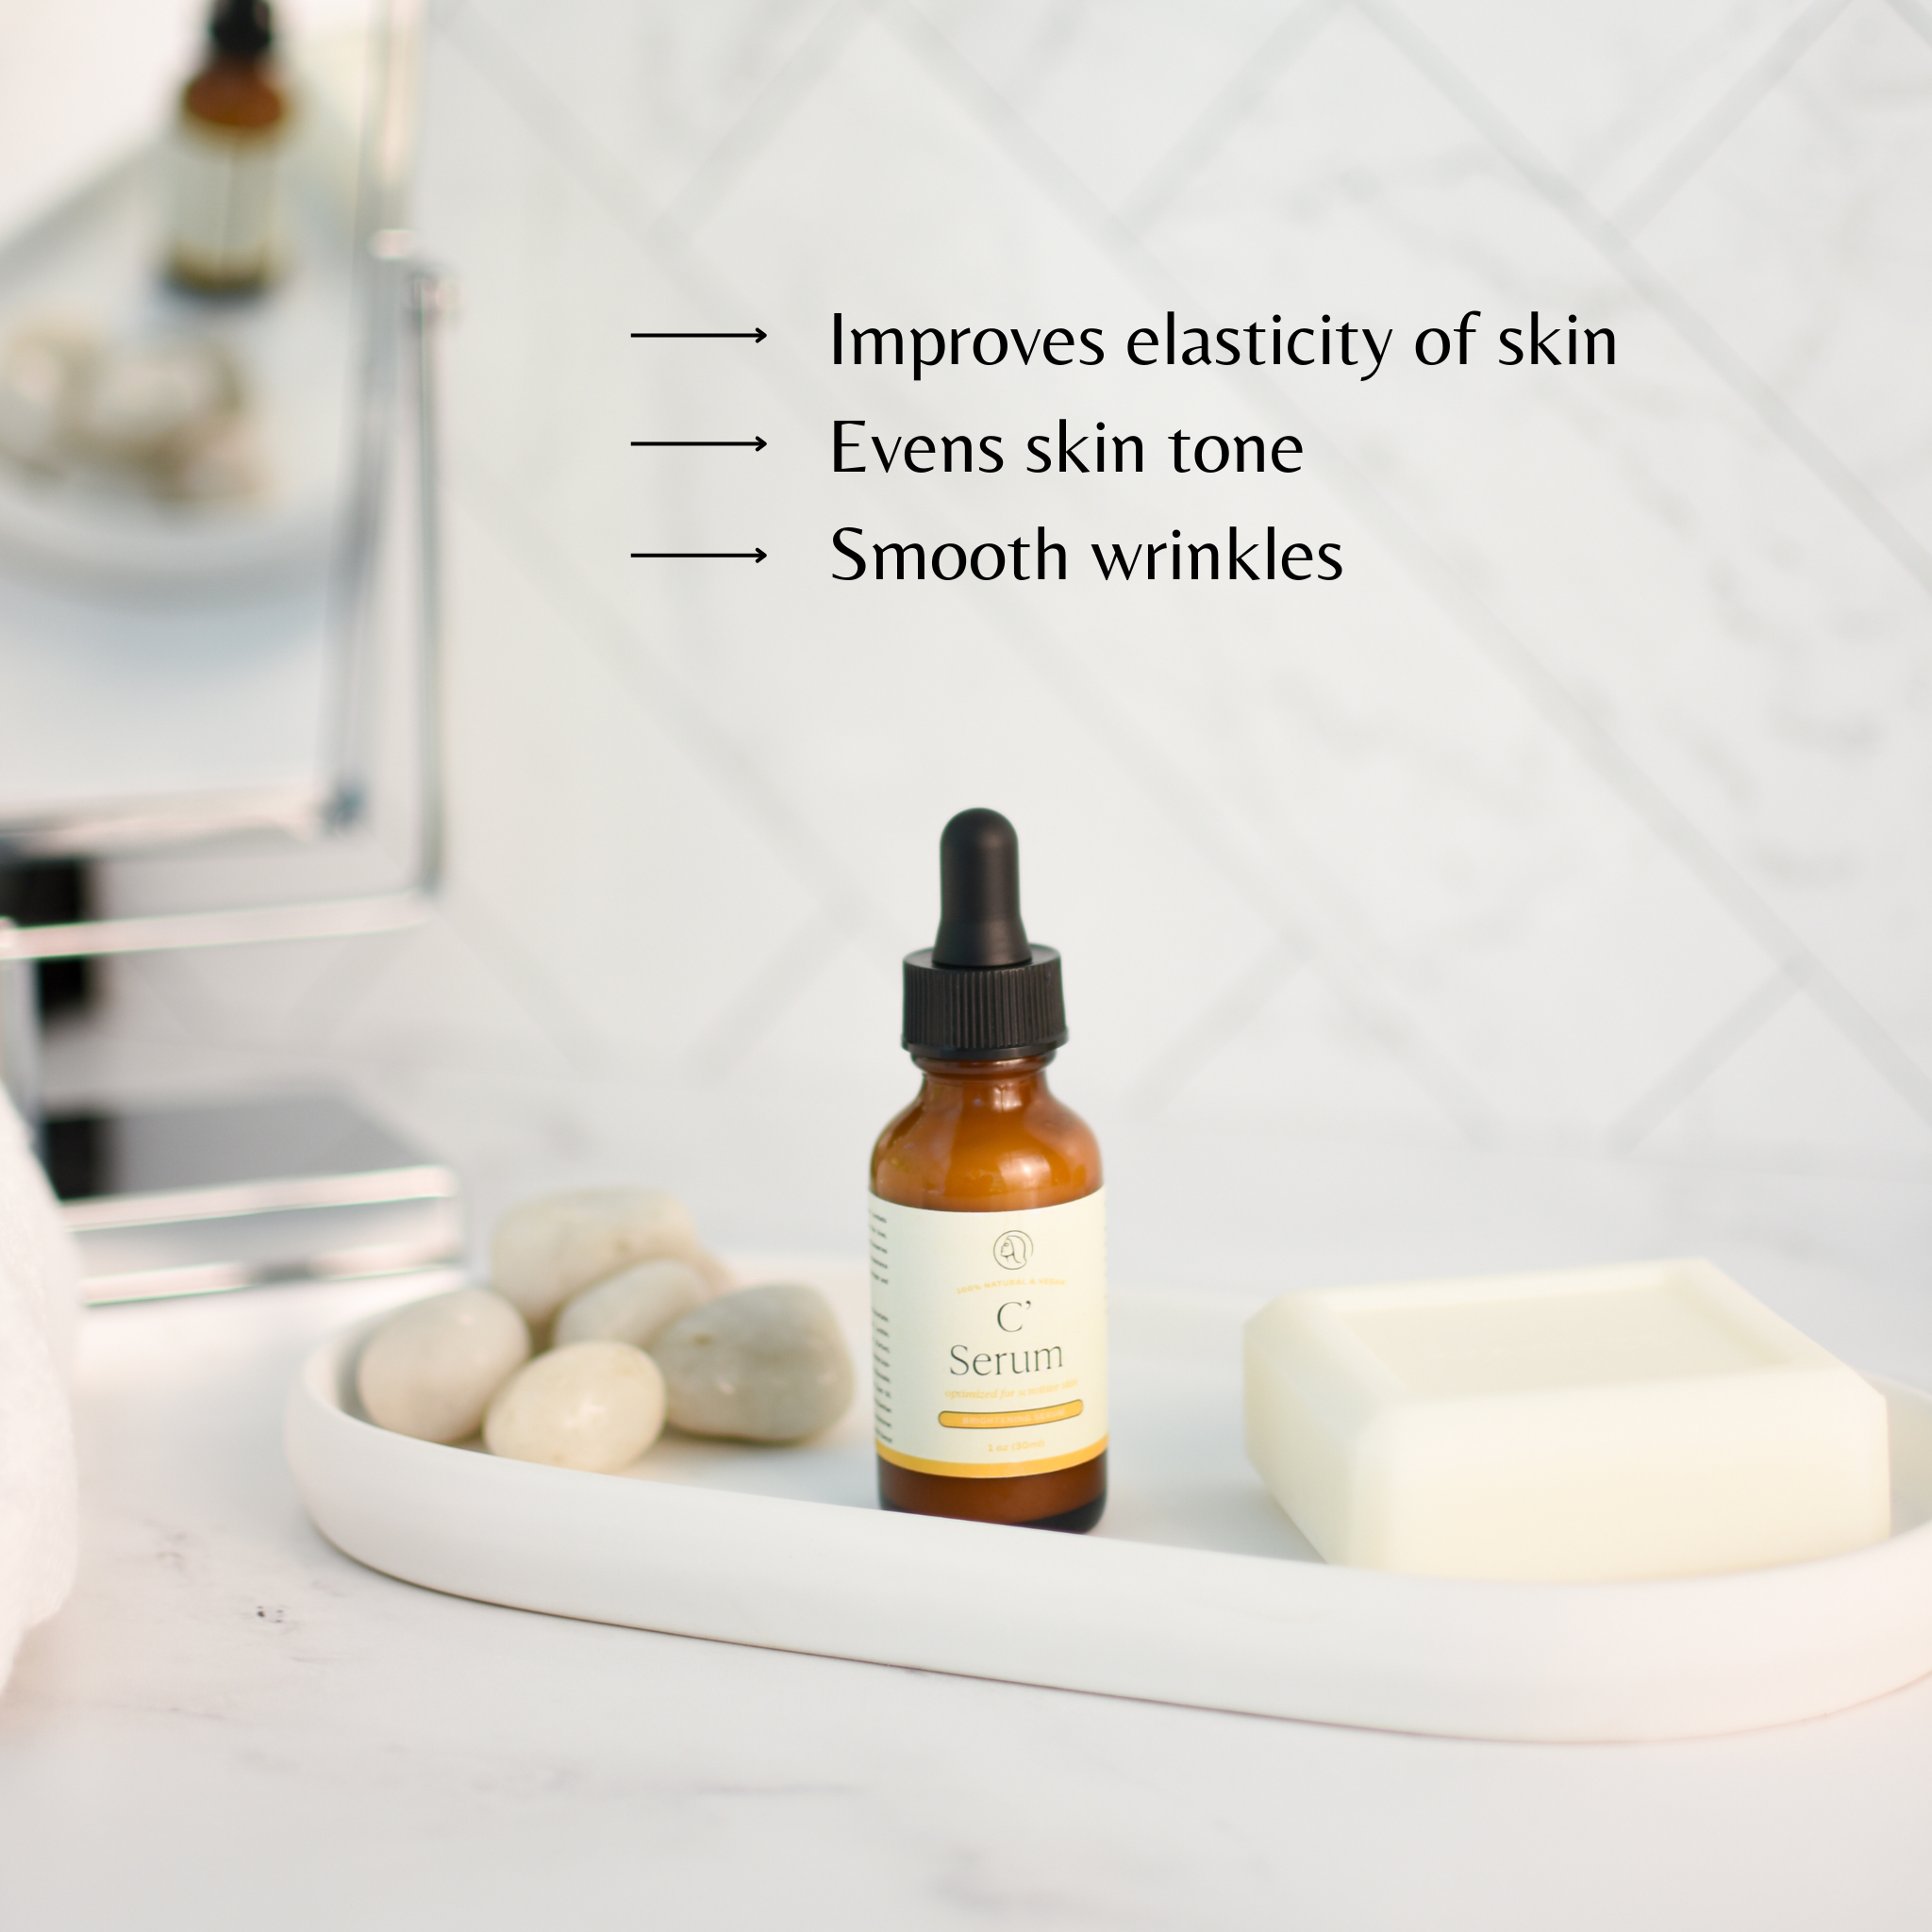 Vitamin C Serum - Mavian Beauty: improves elasticity of skin, evens skin tone and smooth wrinkles.